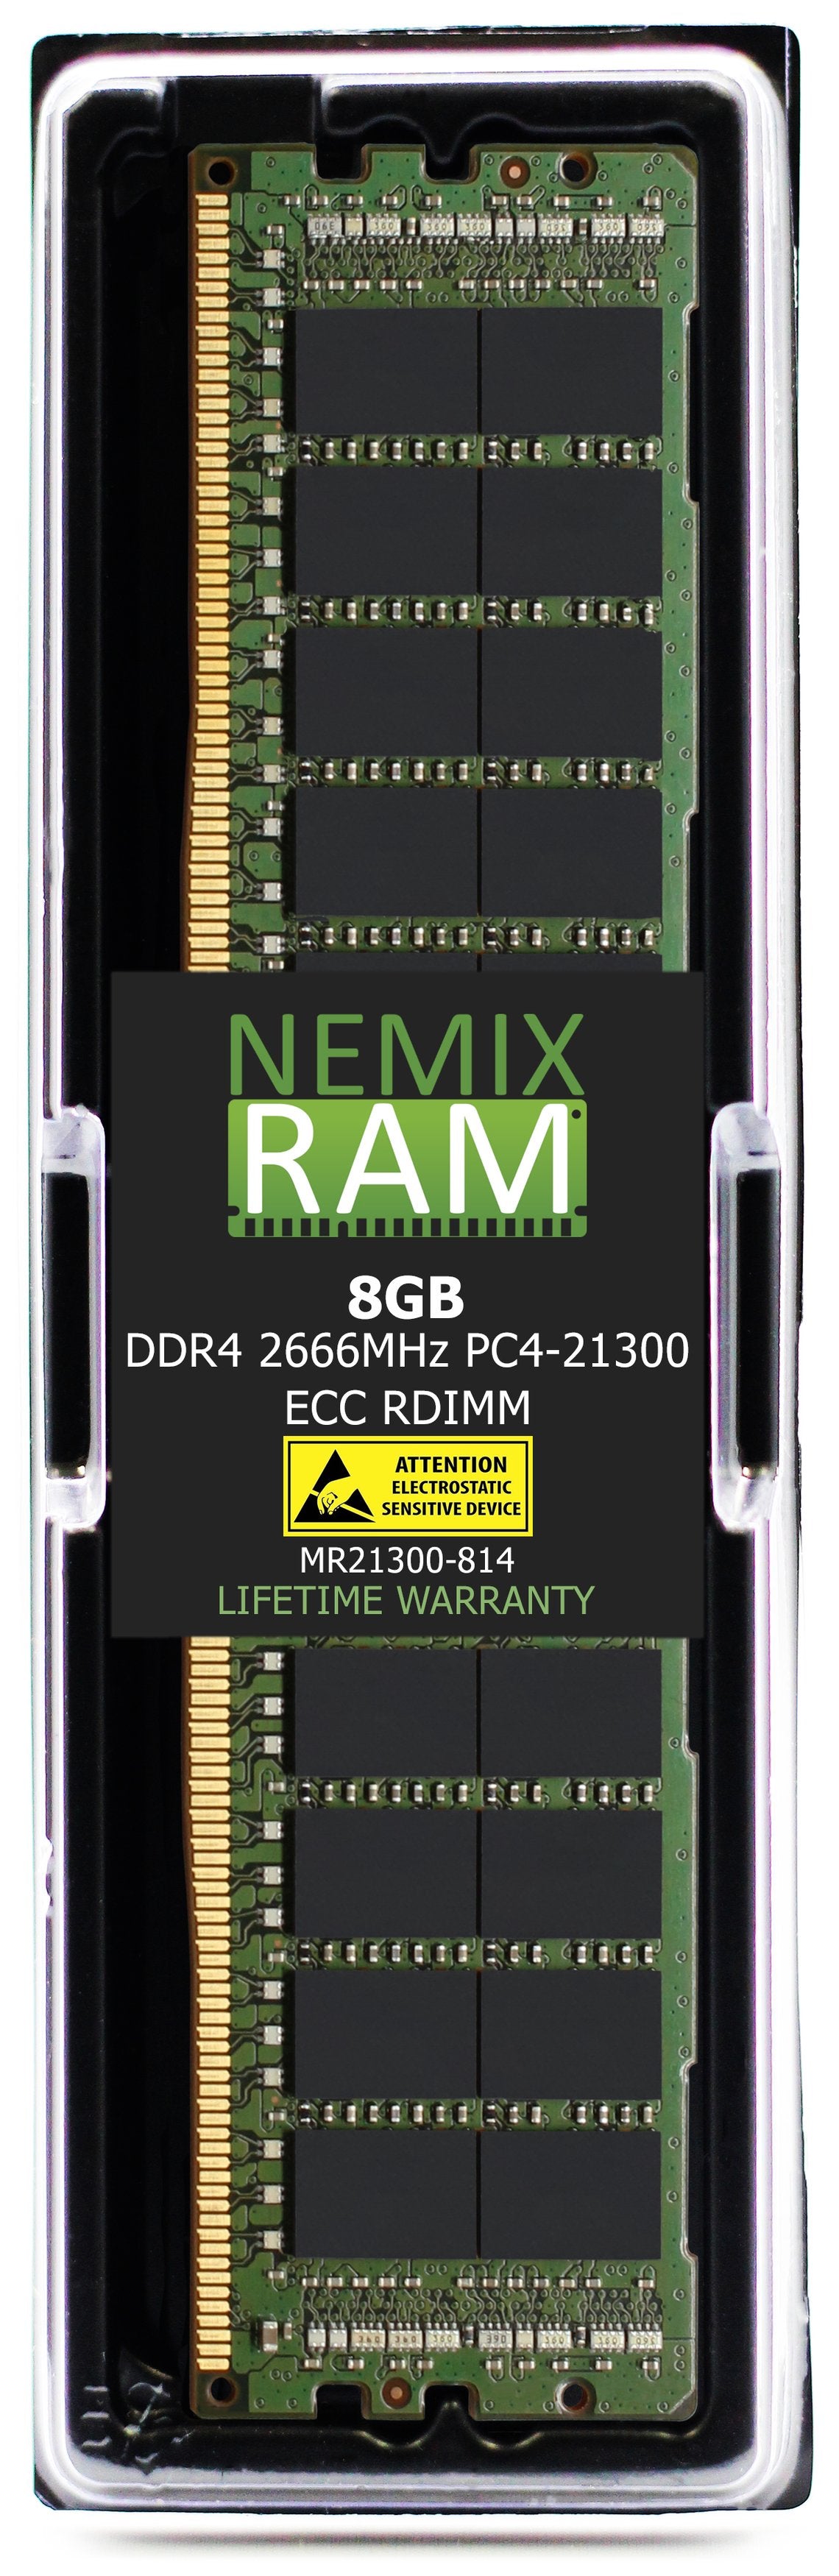 NEC Express5800 T120h Memory Module N8102-708 8GB DDR4 2666MHZ PC4-21300 RDIMM